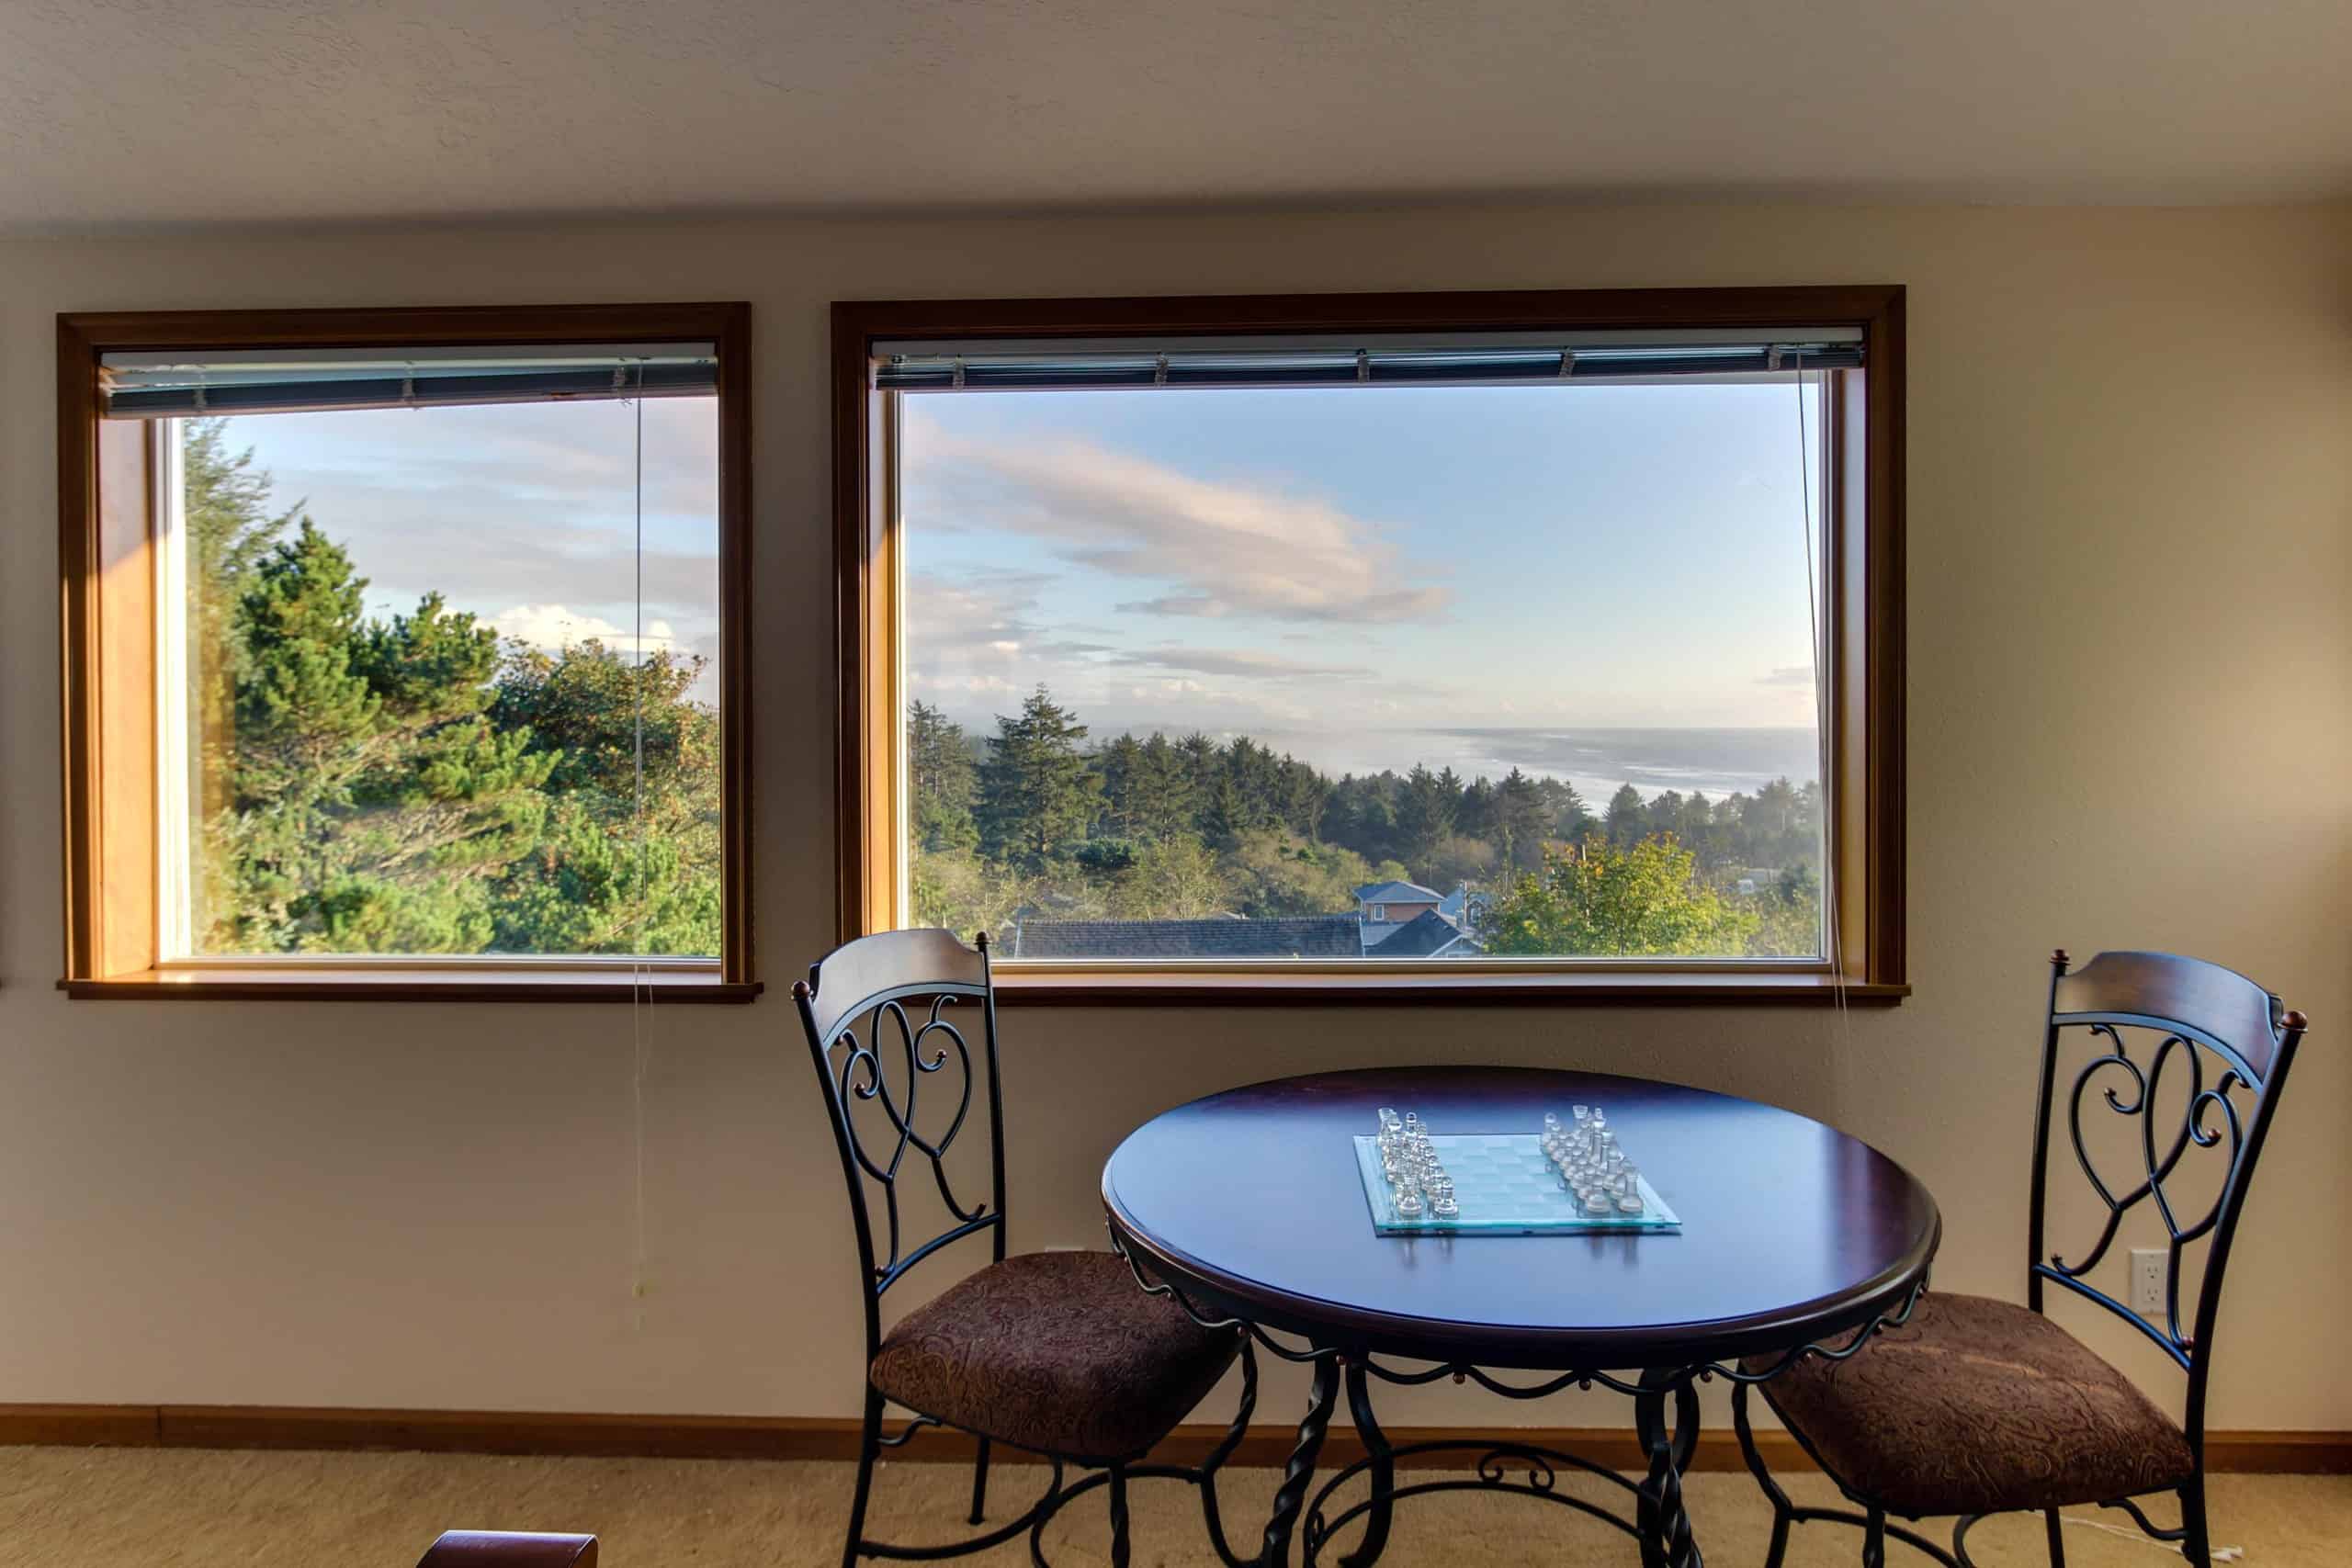 Image of Airbnb rental in Newport, Oregon